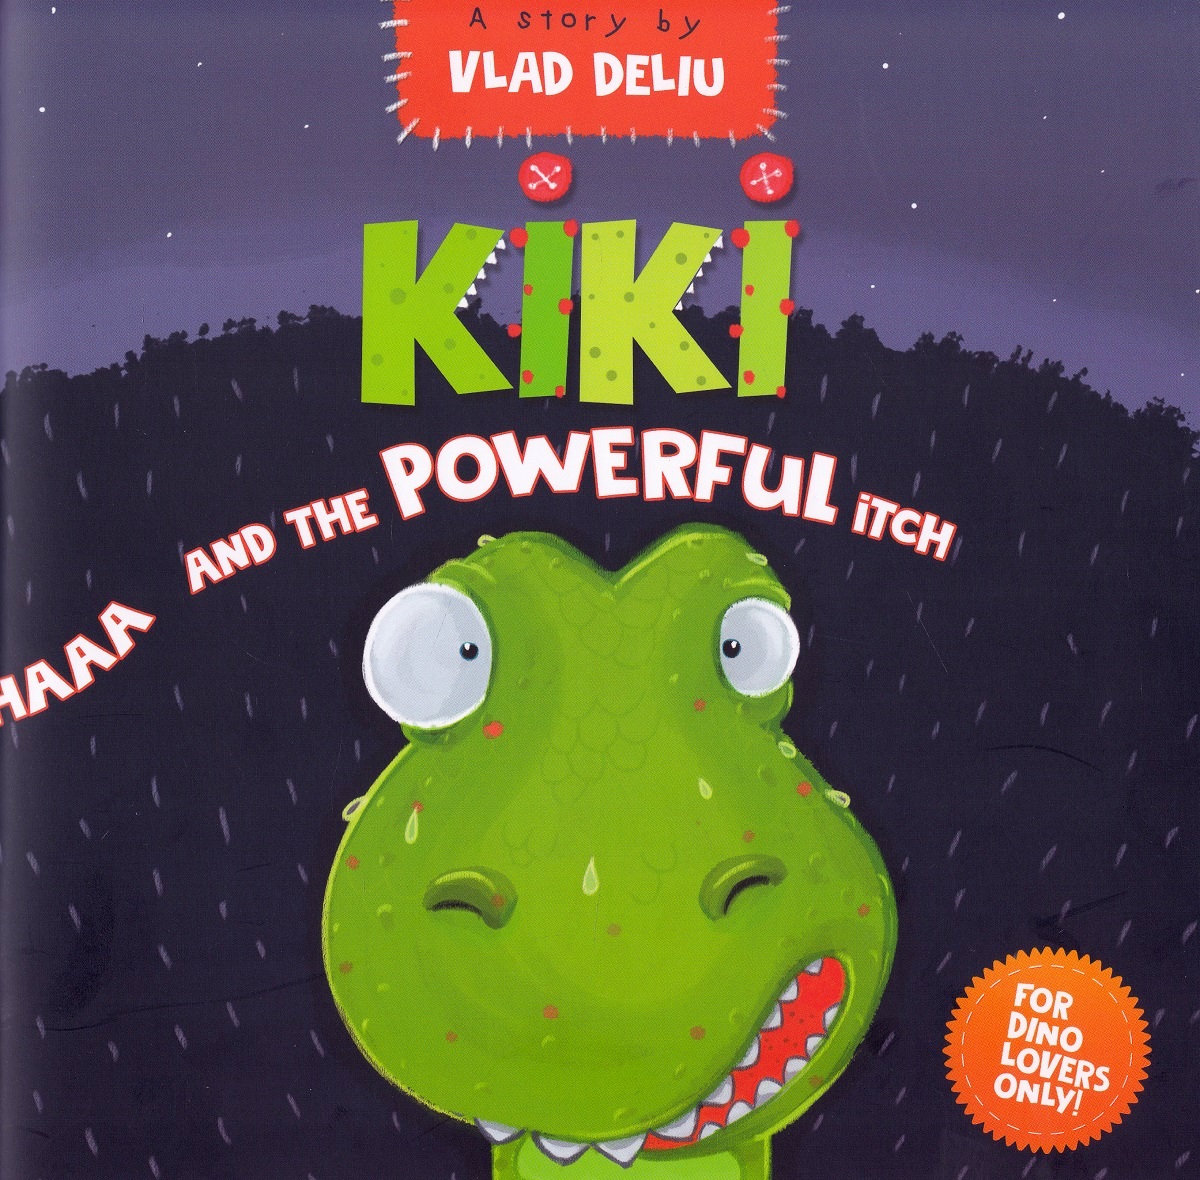 KIKI and The Powerful Itch - Vlad Deliu